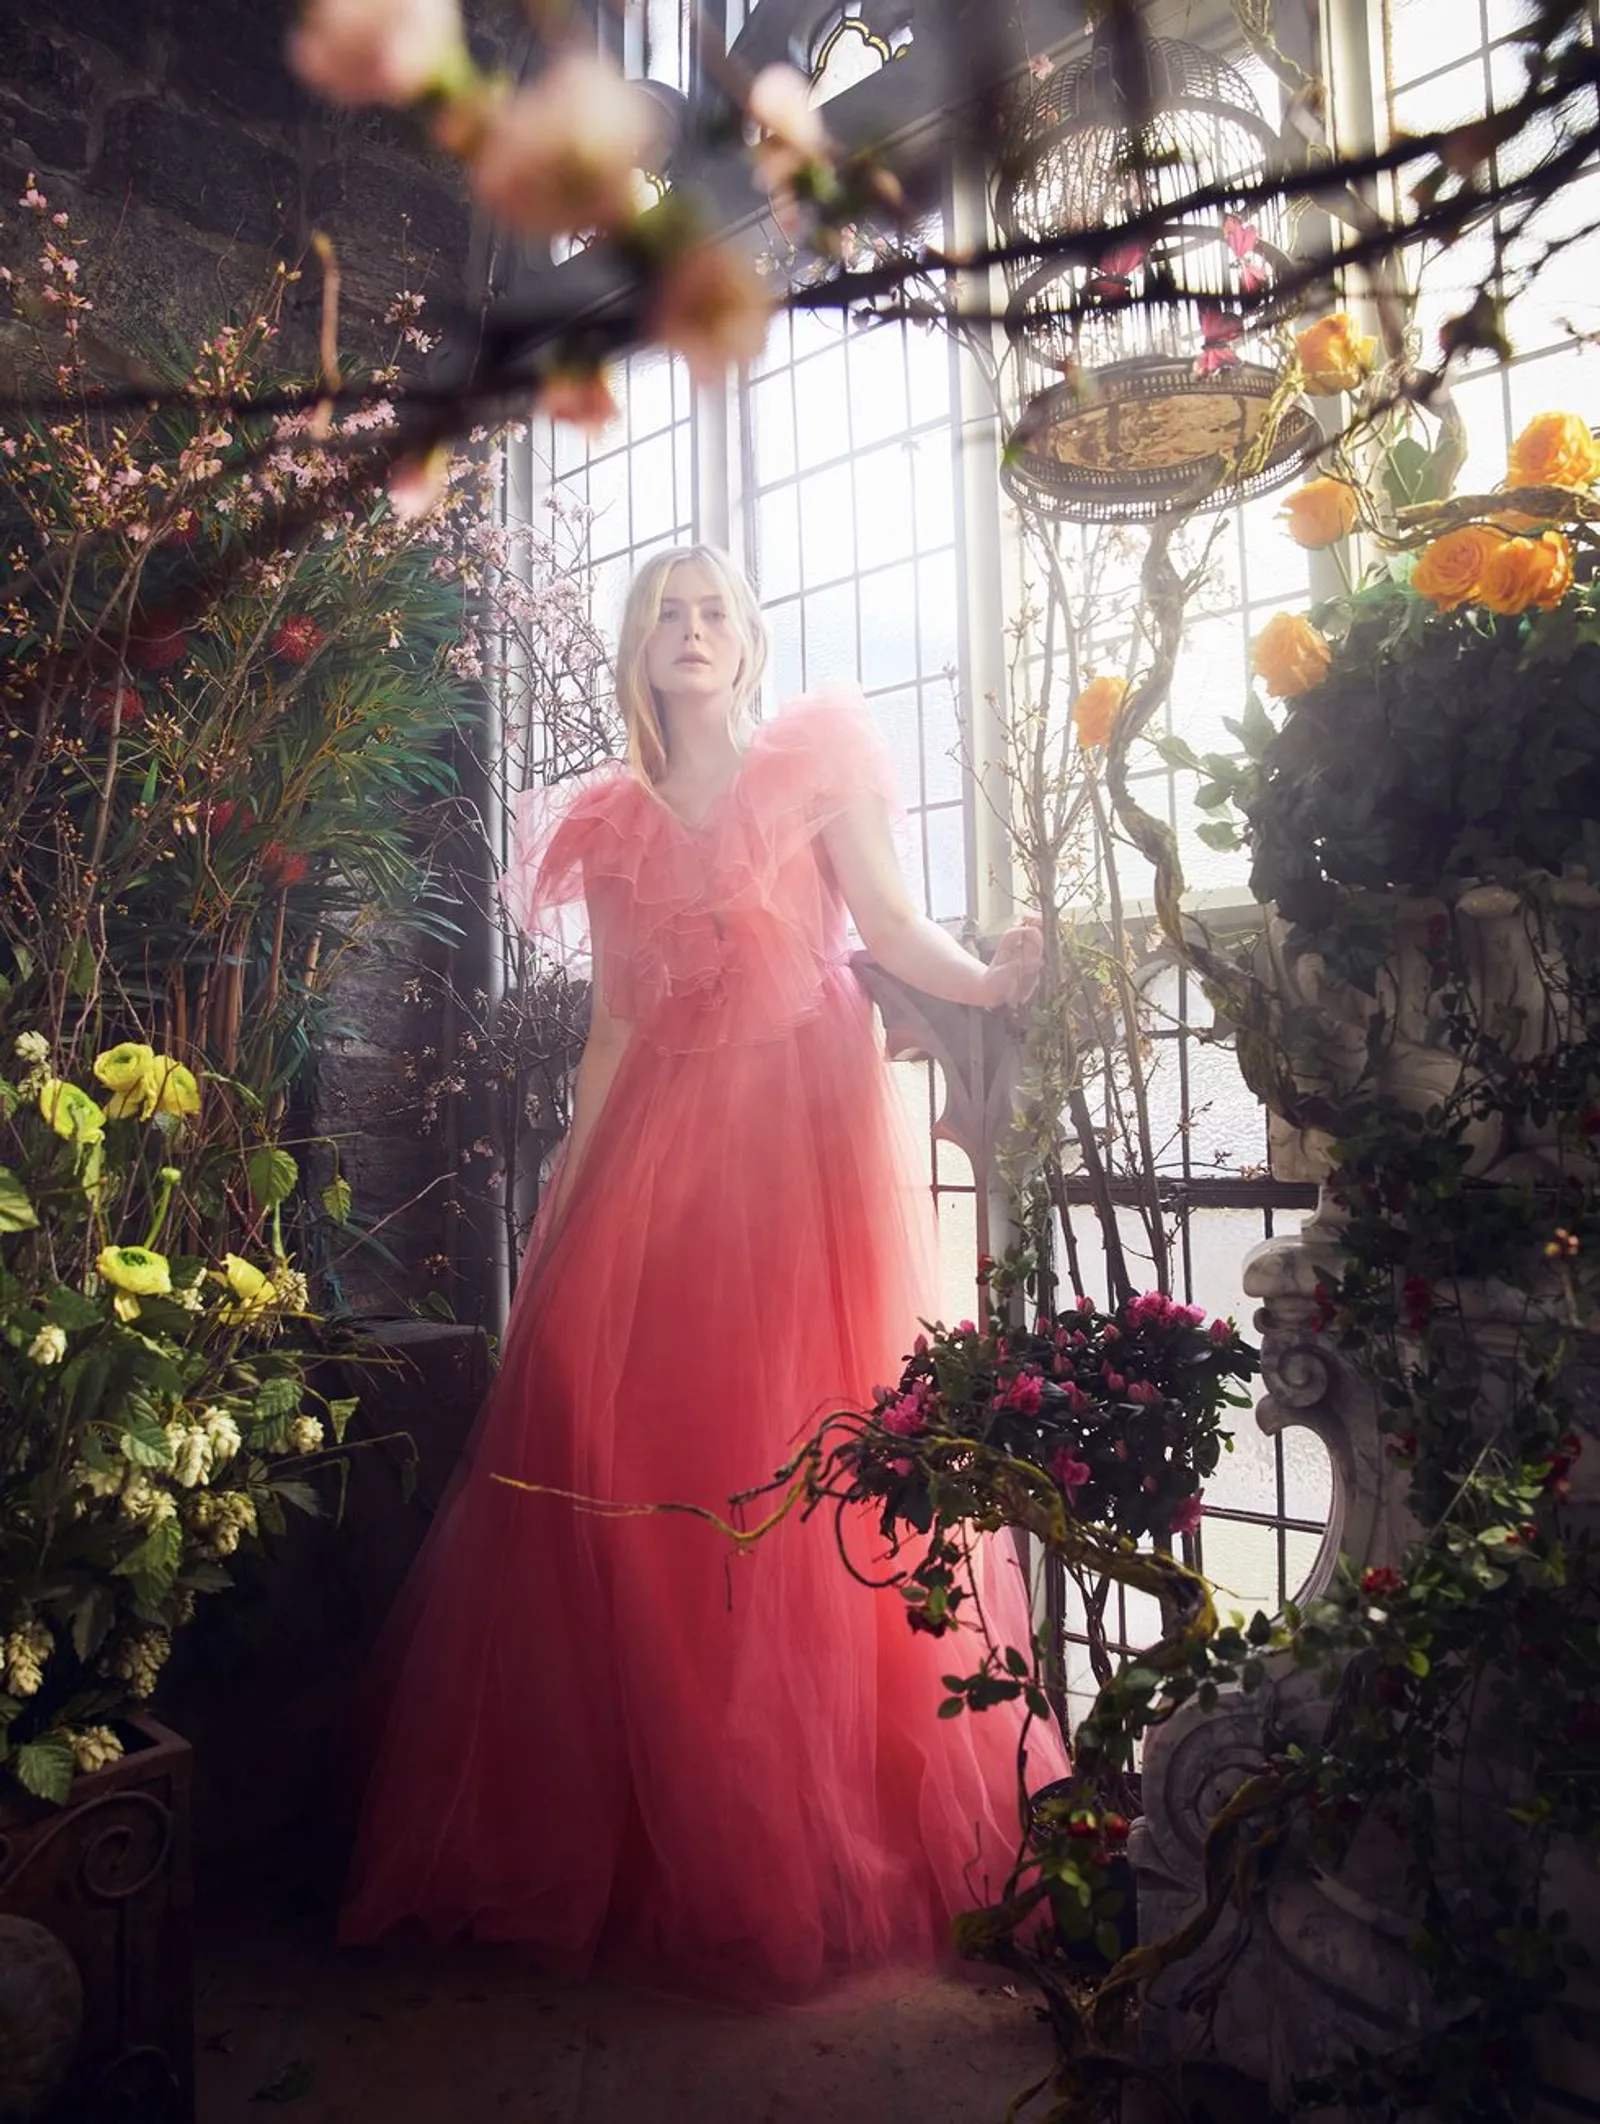 Penampilan Elle Fanning di Photoshoot Bernuansa Fairytale